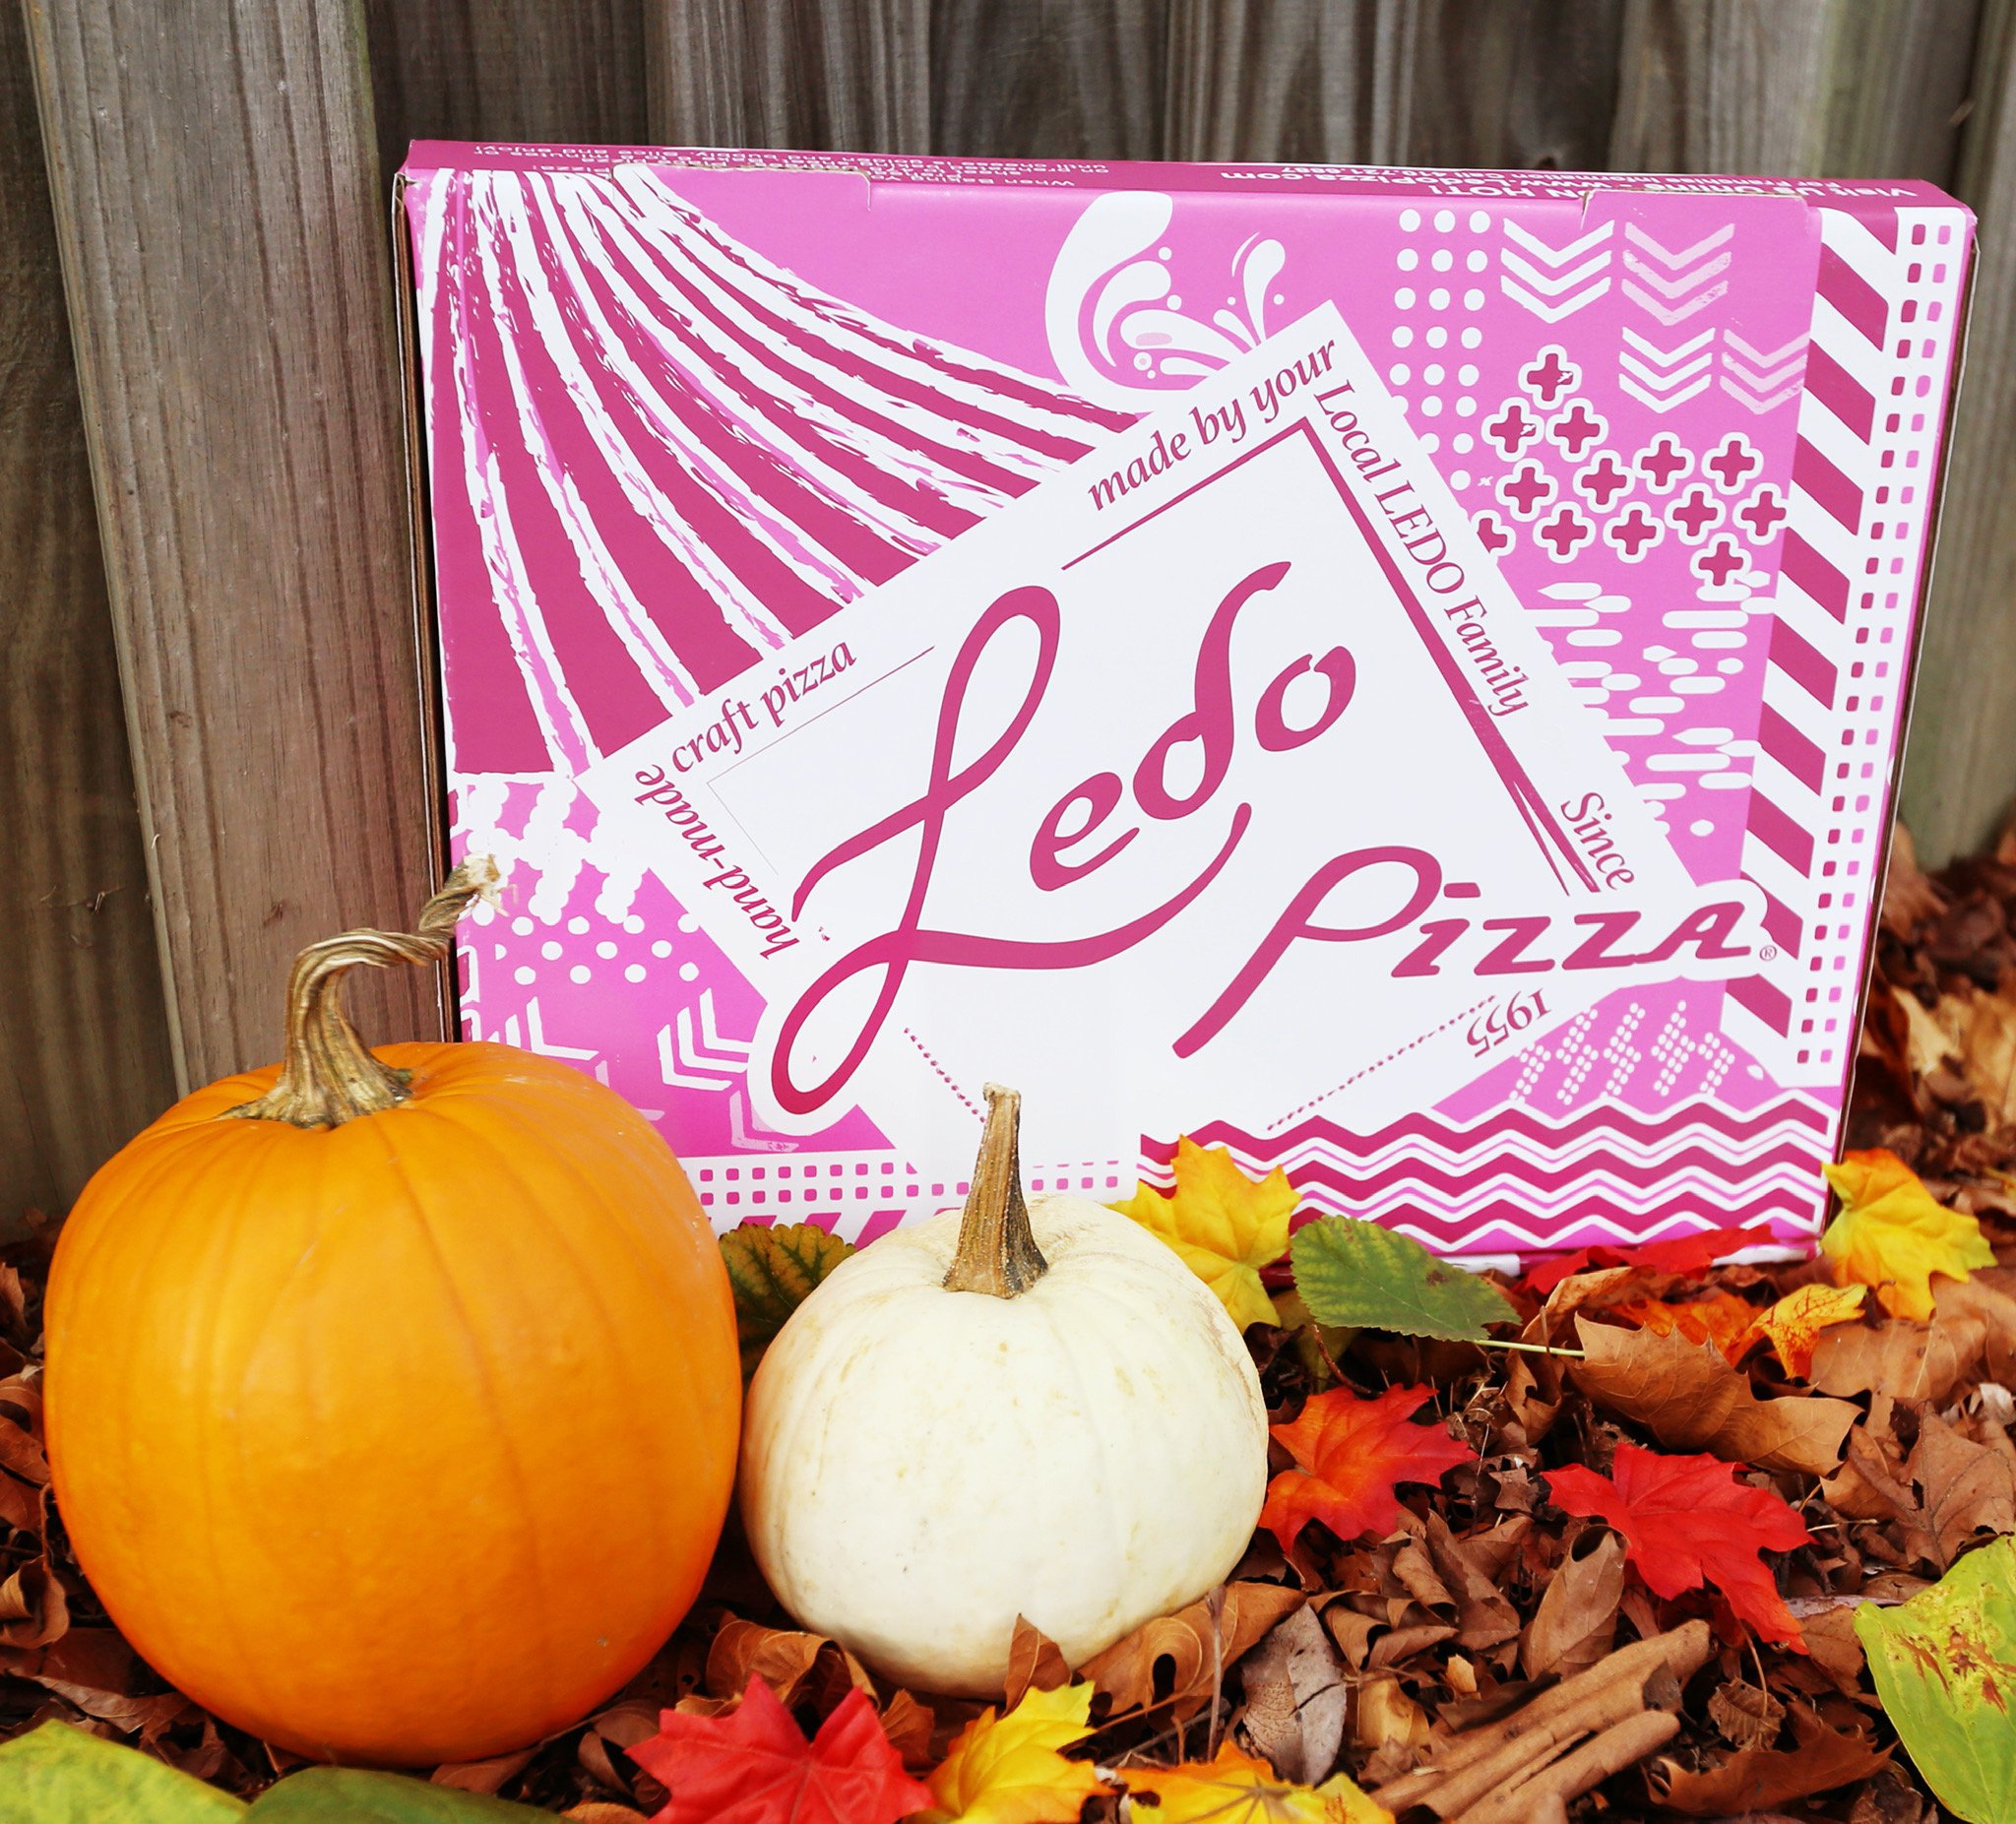 Pink Ledo Pizza Box with pumpkins